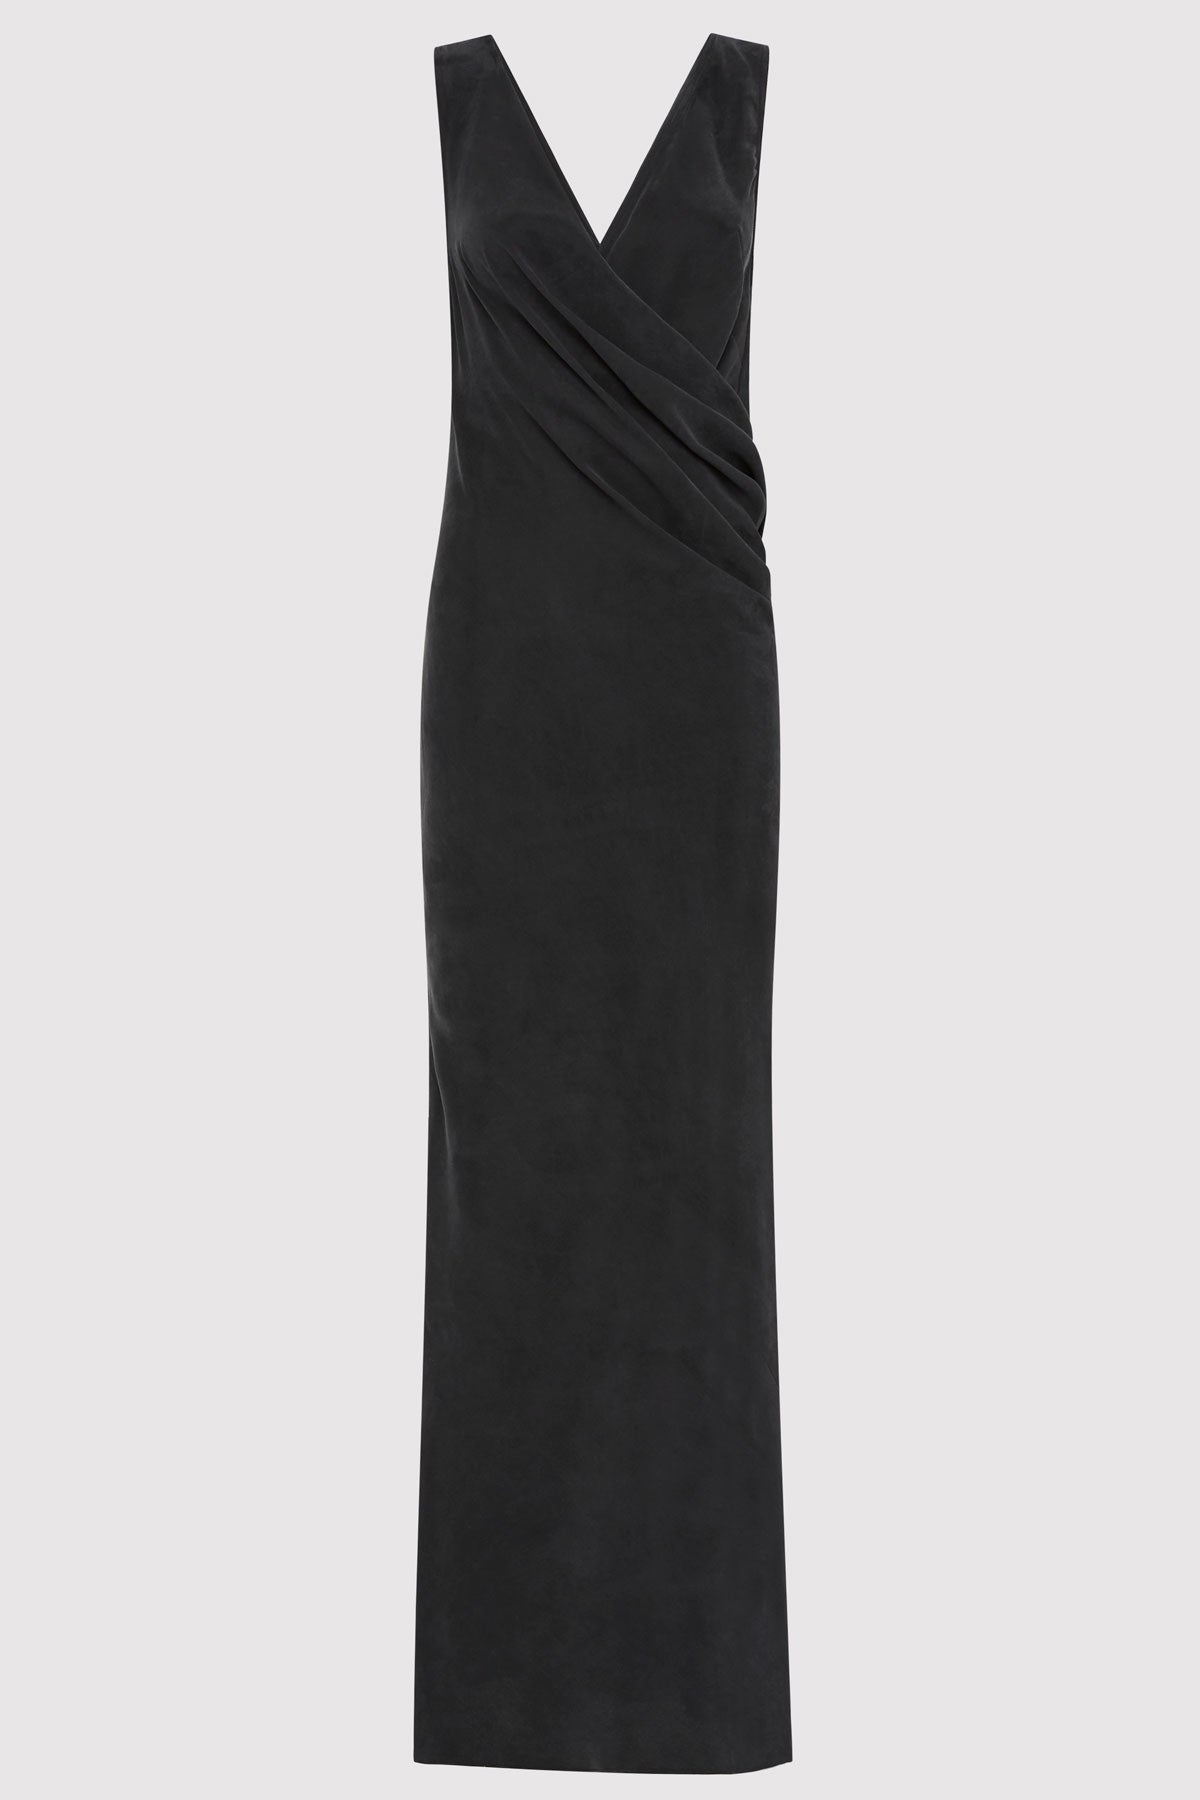 Layered Drape Dress - Black